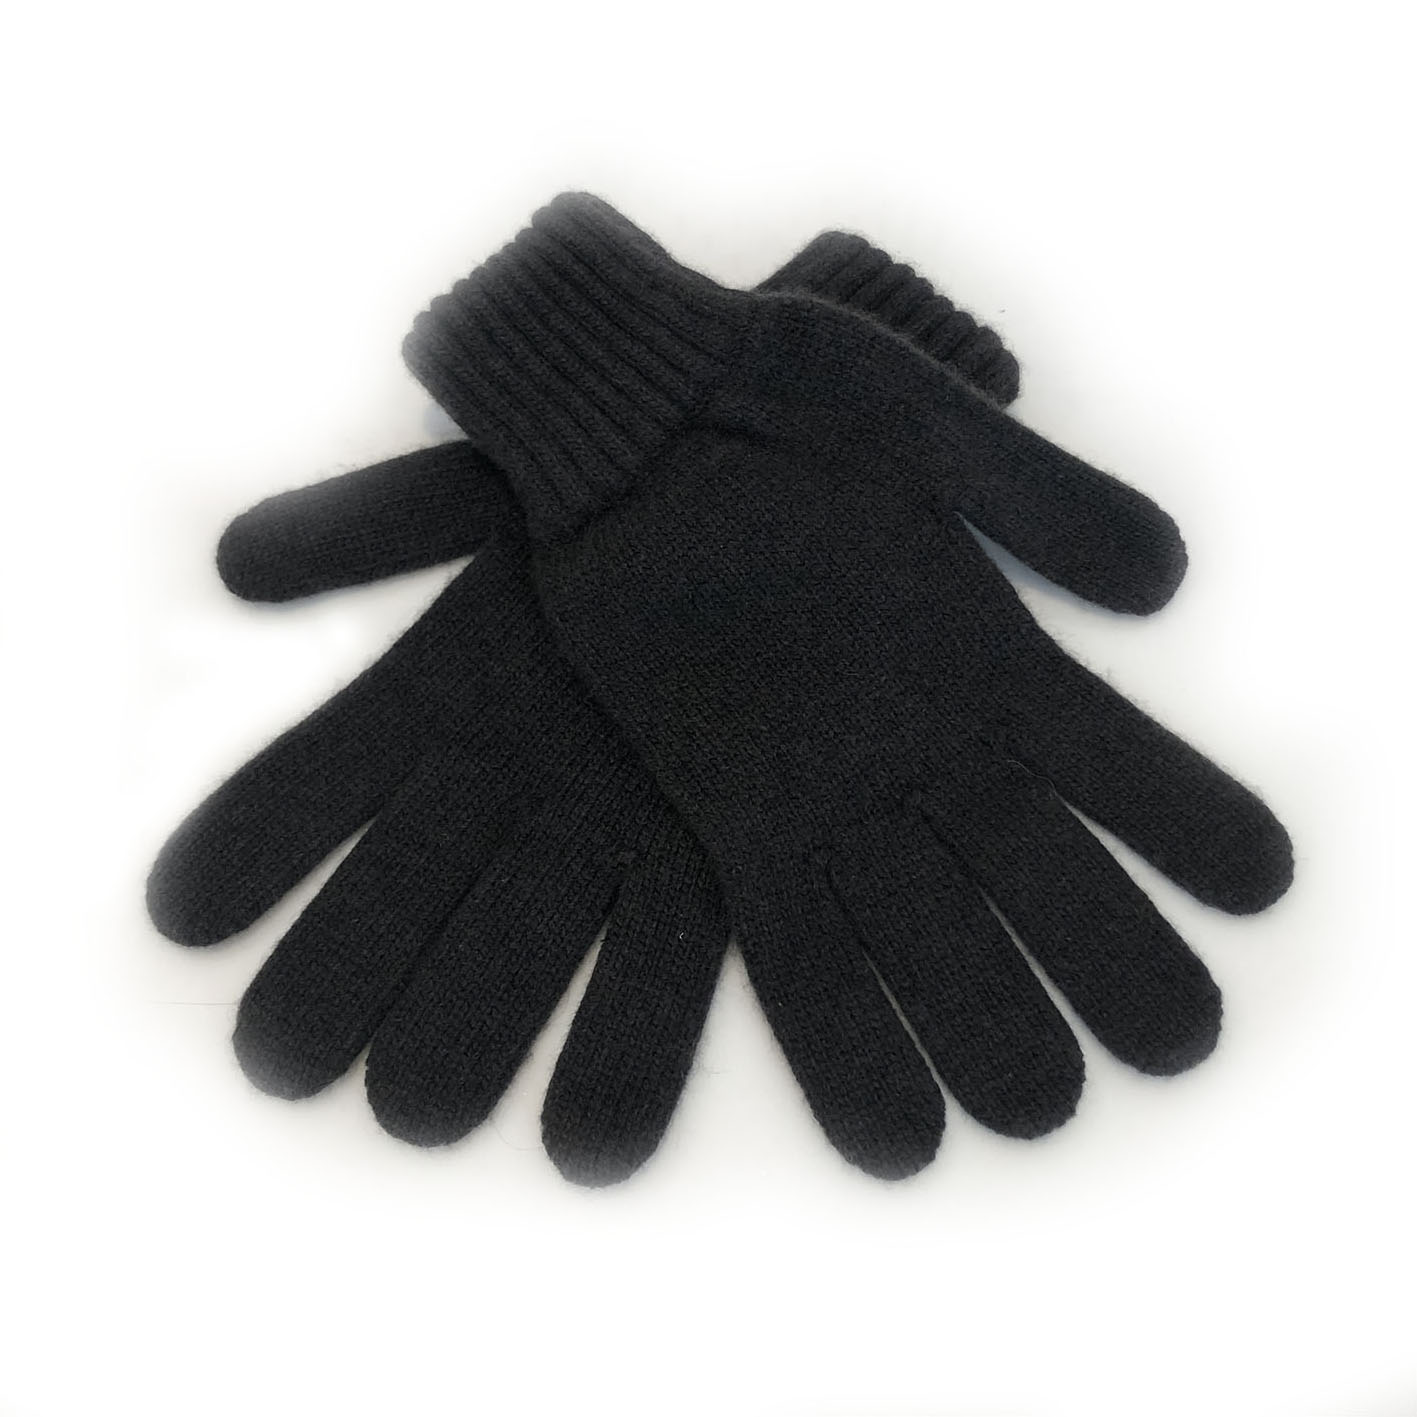 An image of Mens 100% Cashmere Gloves - Assam Peat Black